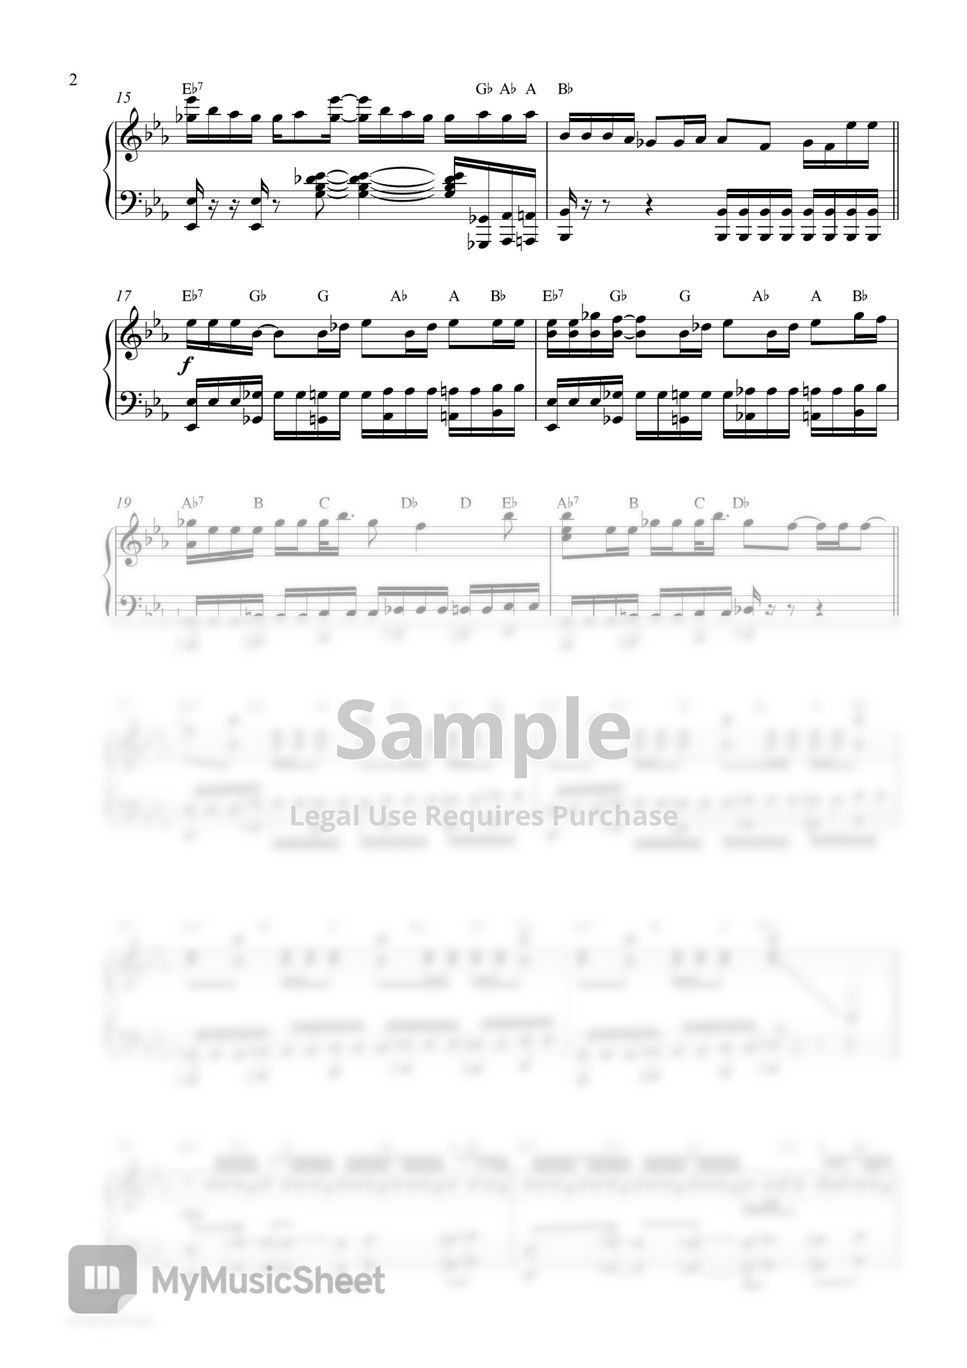 BTS - Run BTS (Piano Sheet + Drum Backing Track) by Pianella Piano